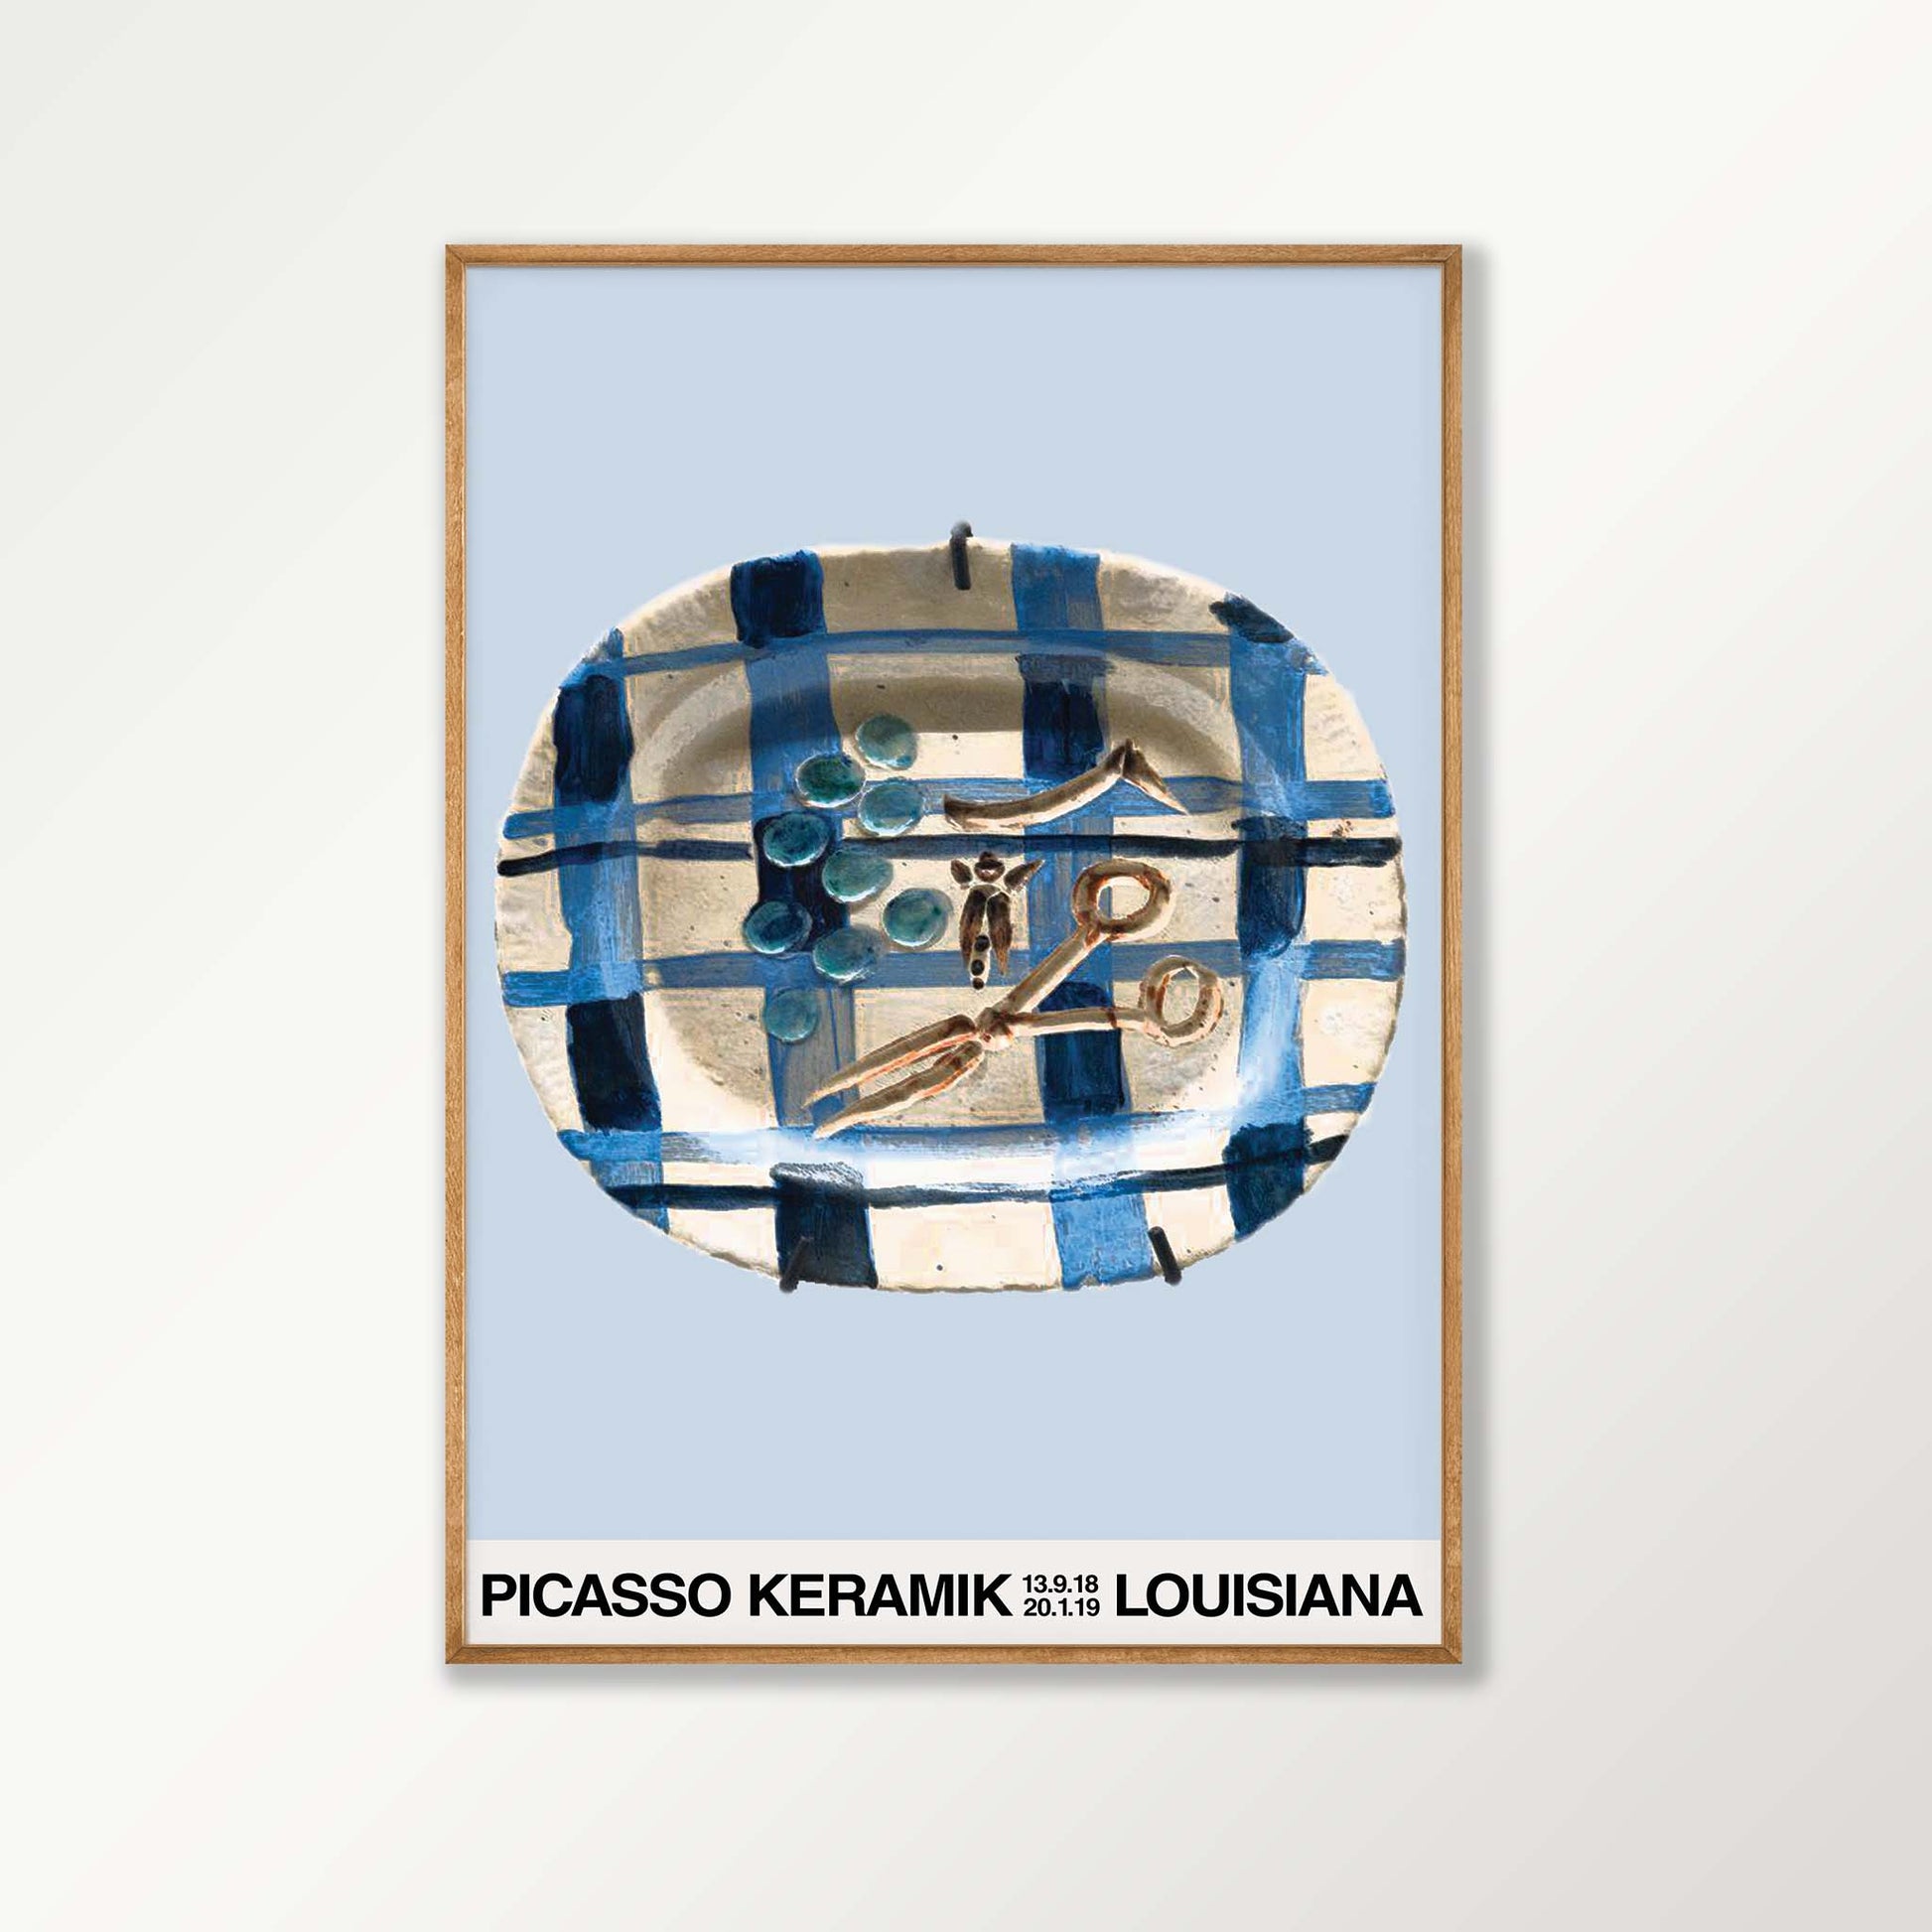 Picasso Keramik Louisiana Exhibition Print atolloprintshop